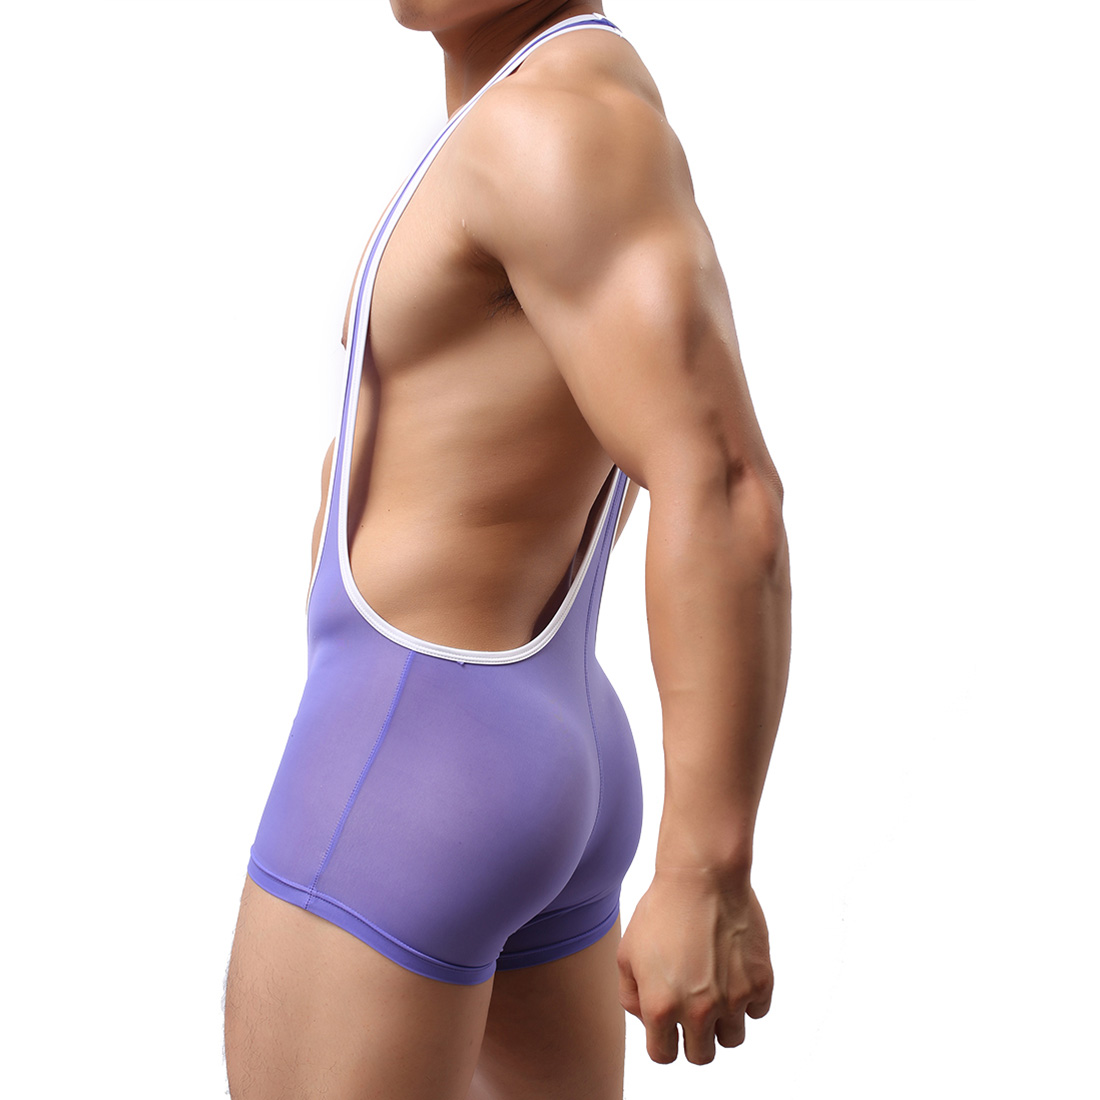 Men's Sexy Lingerie Underwear Sport Fitness One-pieces Swimsuit Wrestling Dress WH41 Purple M